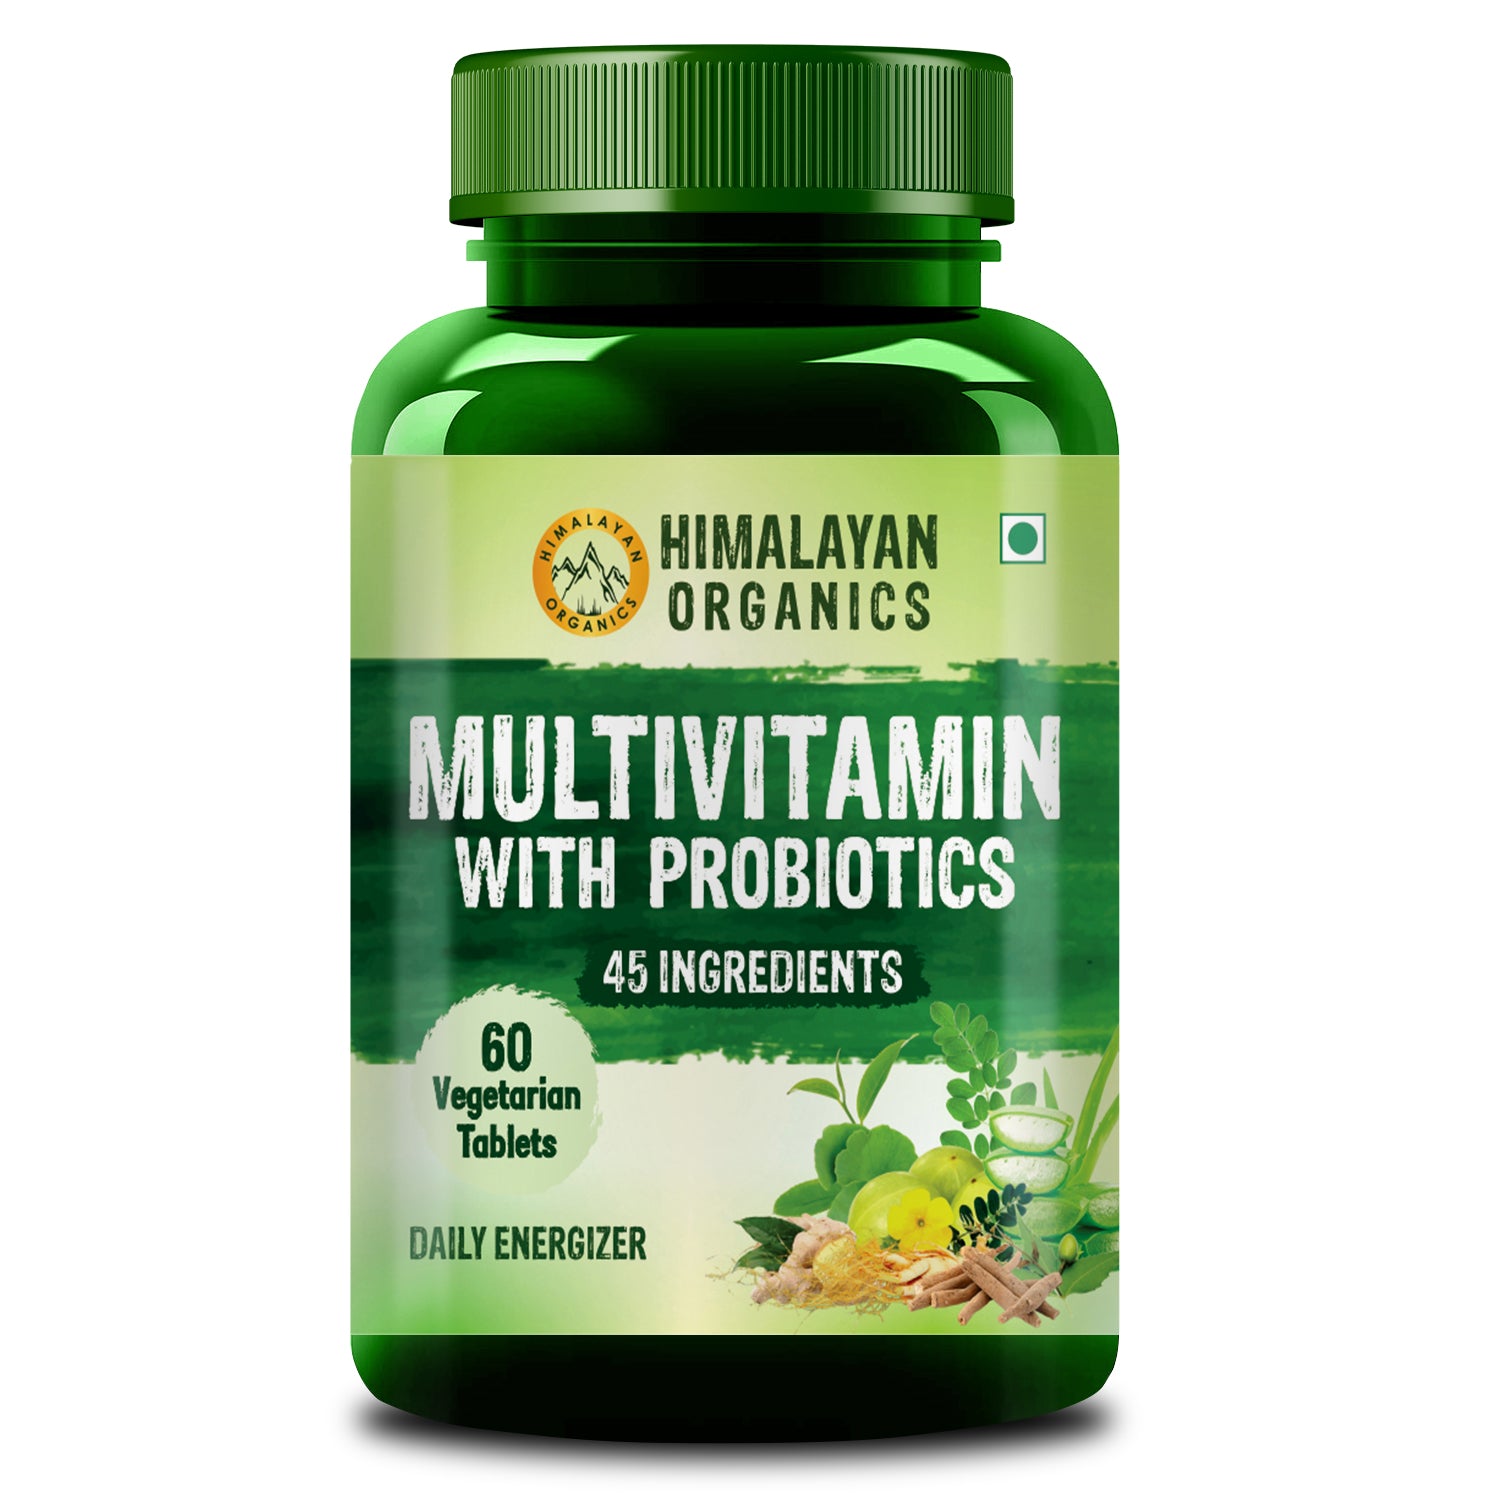 Himalayan Organics Multivitamin Tablets with Probiotics for Men & Women - 60 Veg Tablets 